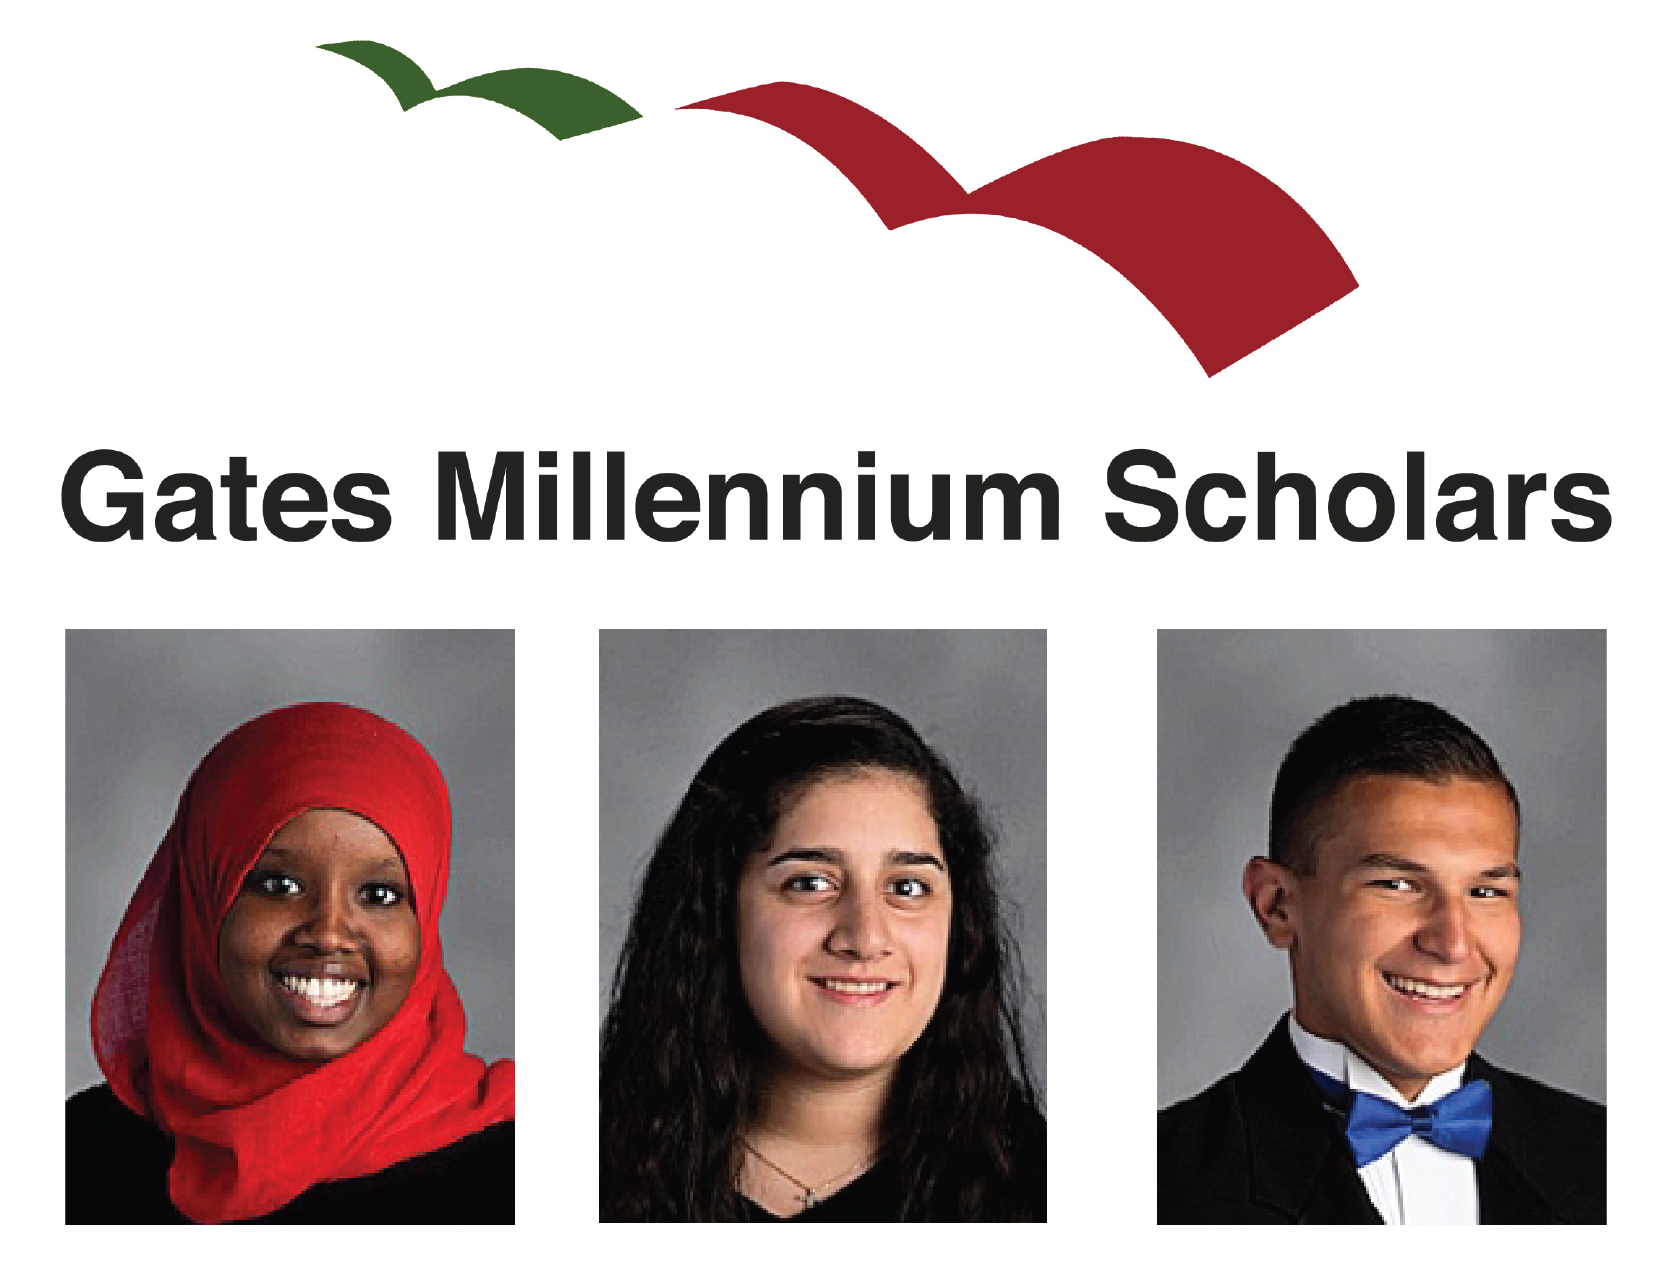 Congratulations to our Gates Millennium Scholarship recipients